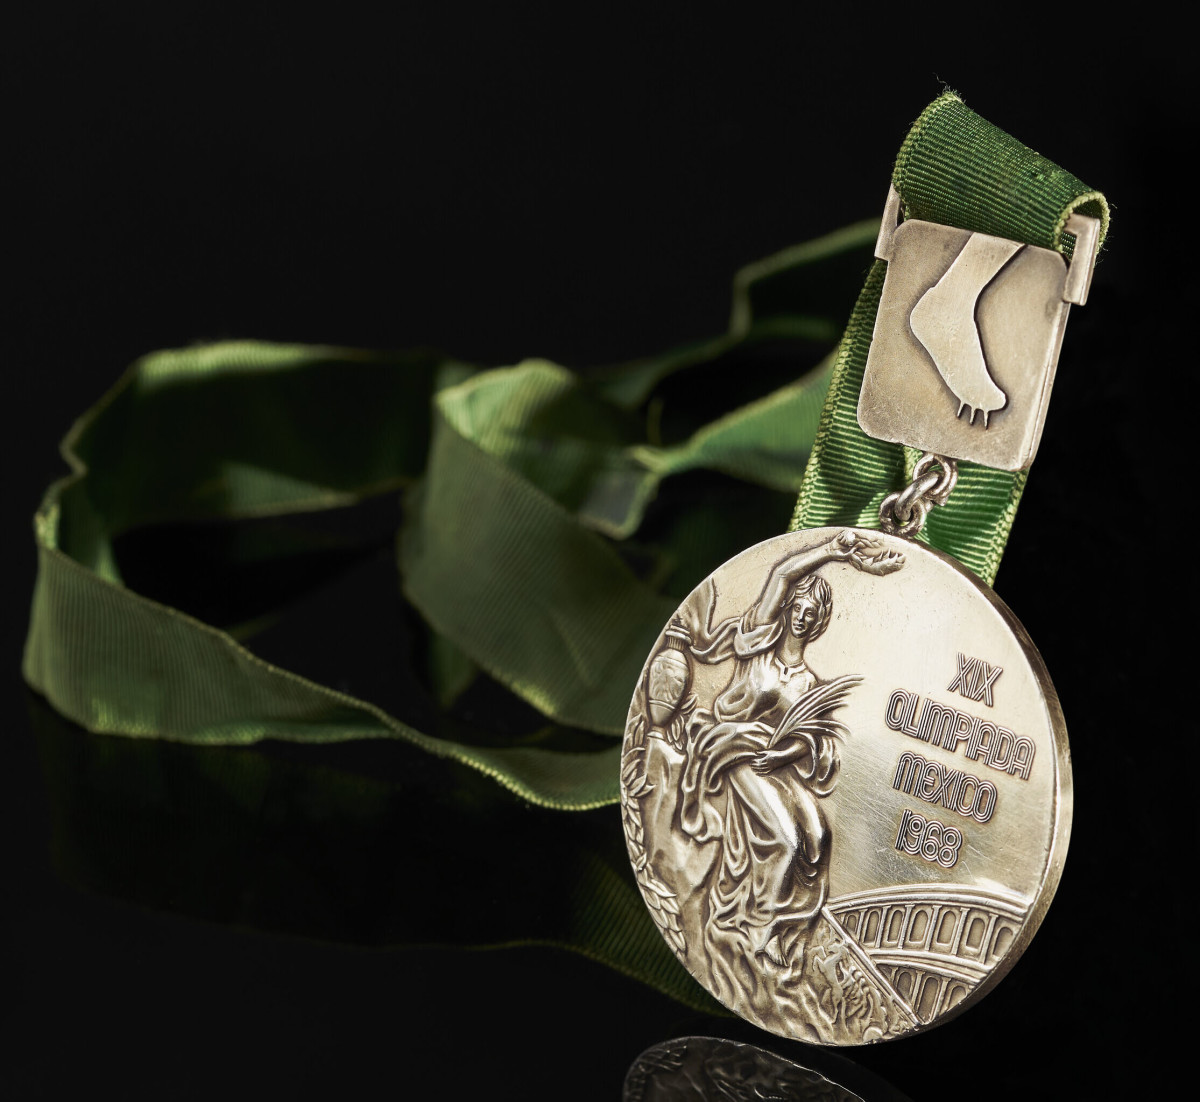 Christie's Bob Beamon gold medal